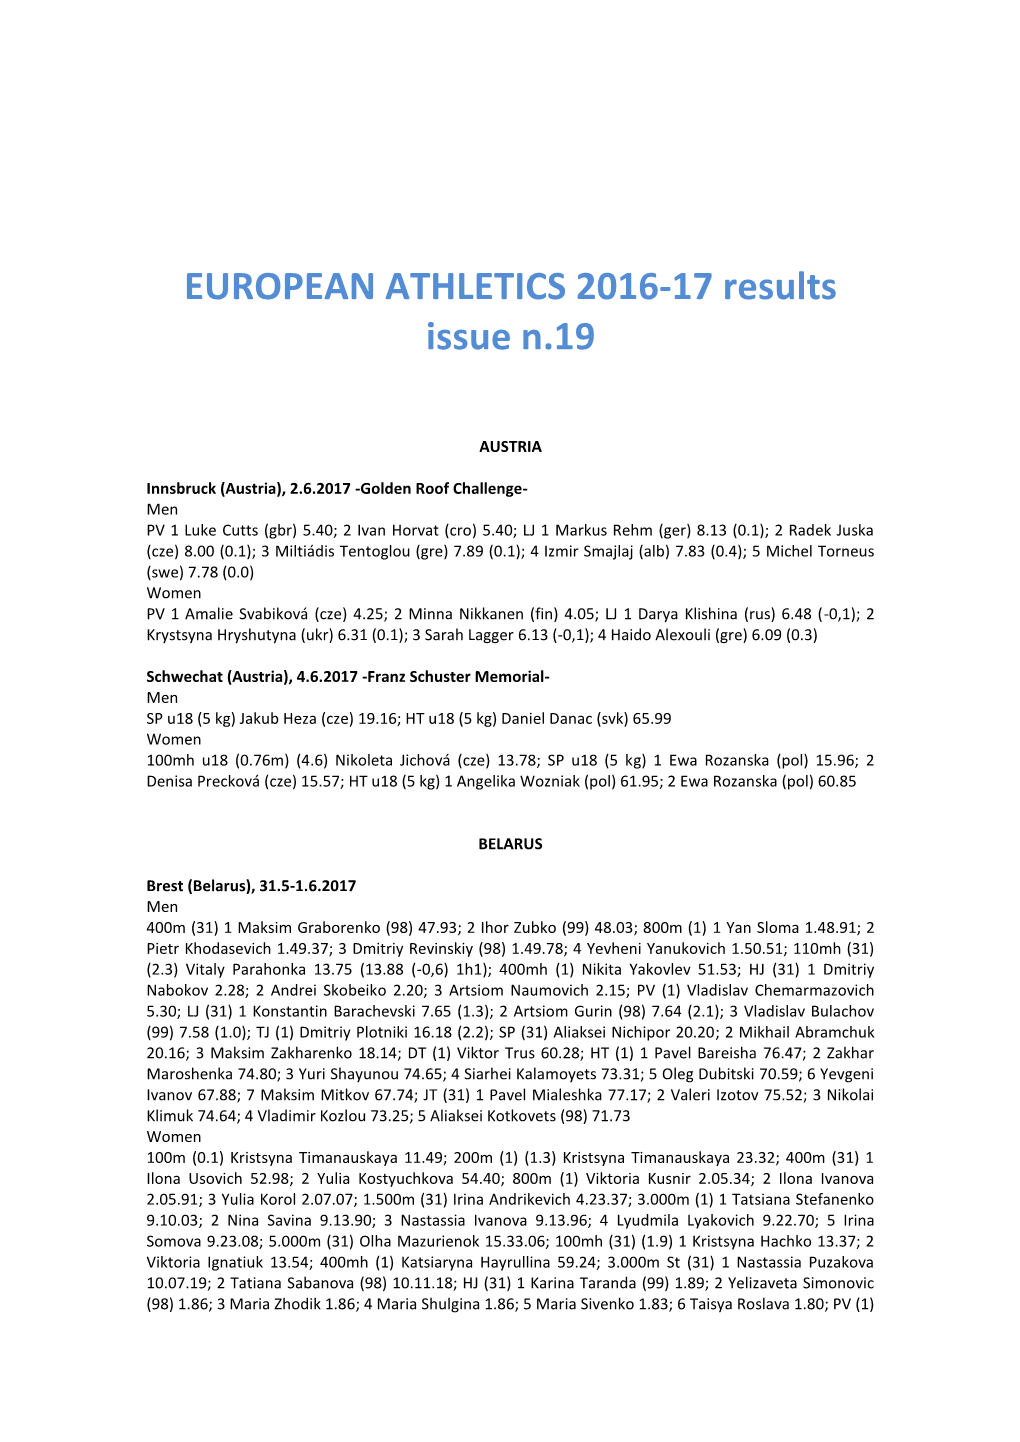 EUROPEAN ATHLETICS 2016-17 Results Issue N.19